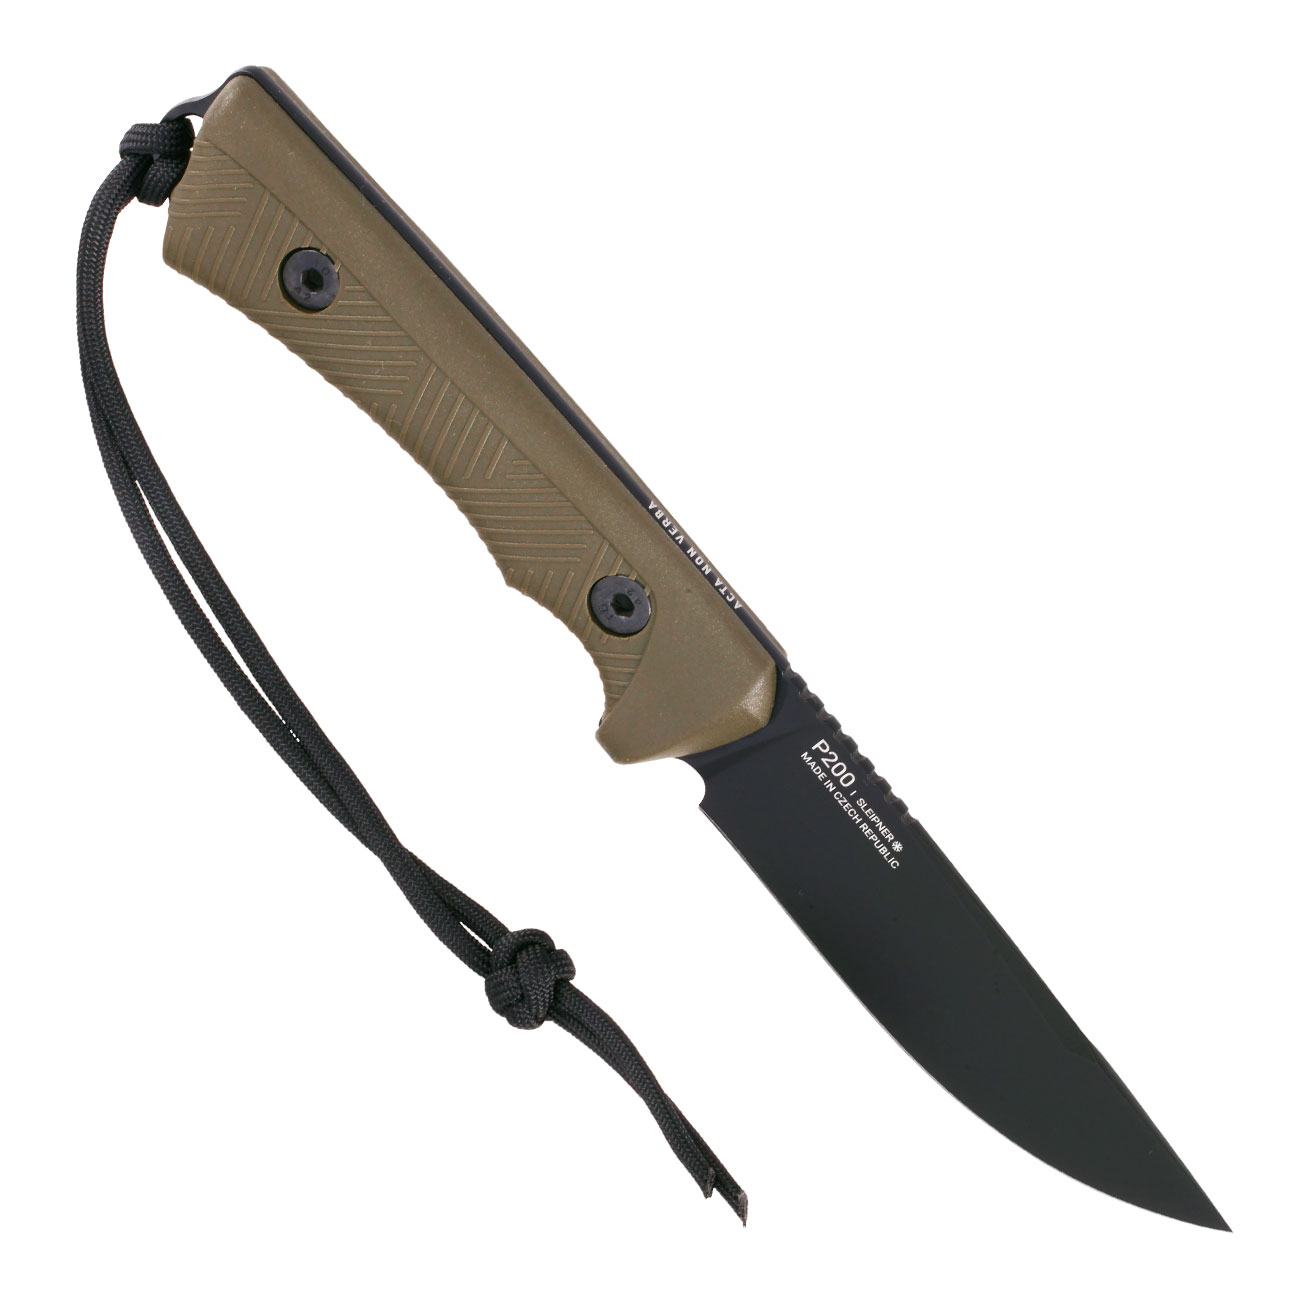 ANV Knives Outdoormesser P200 Sleipner Stahl Cerakote schwarz/oliv inkl. Kydexscheide Bild 1